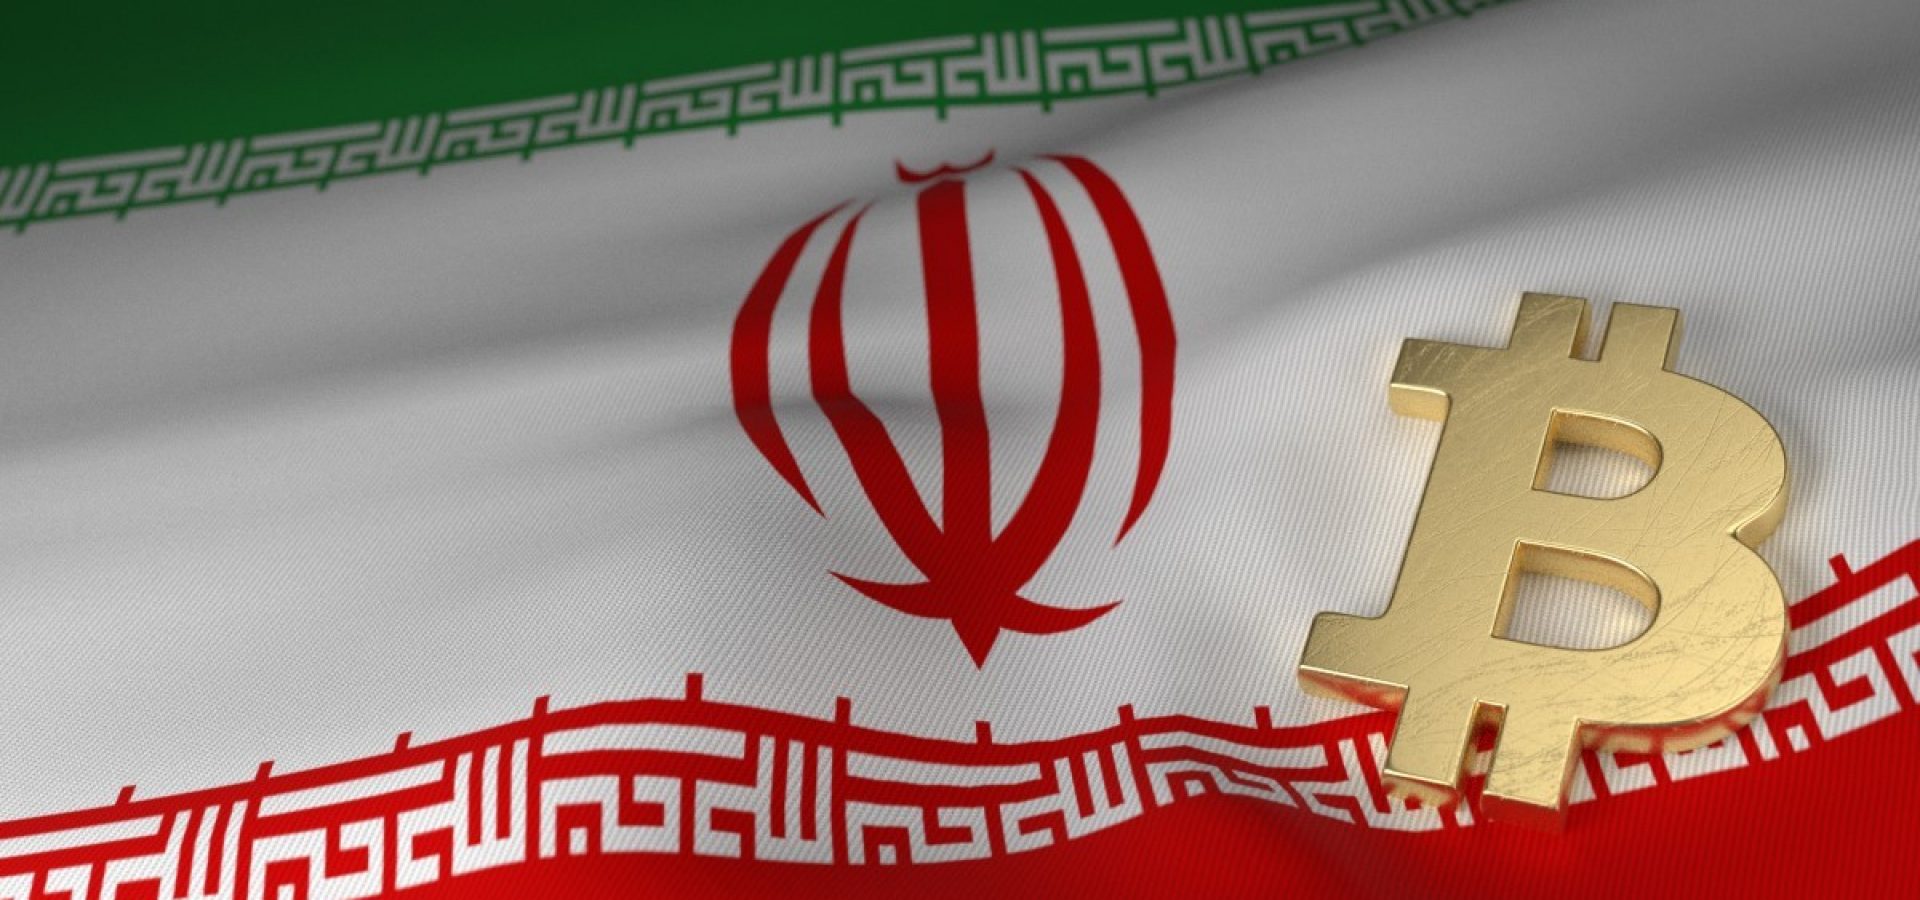 Iranian authorities and cryptocurrencies